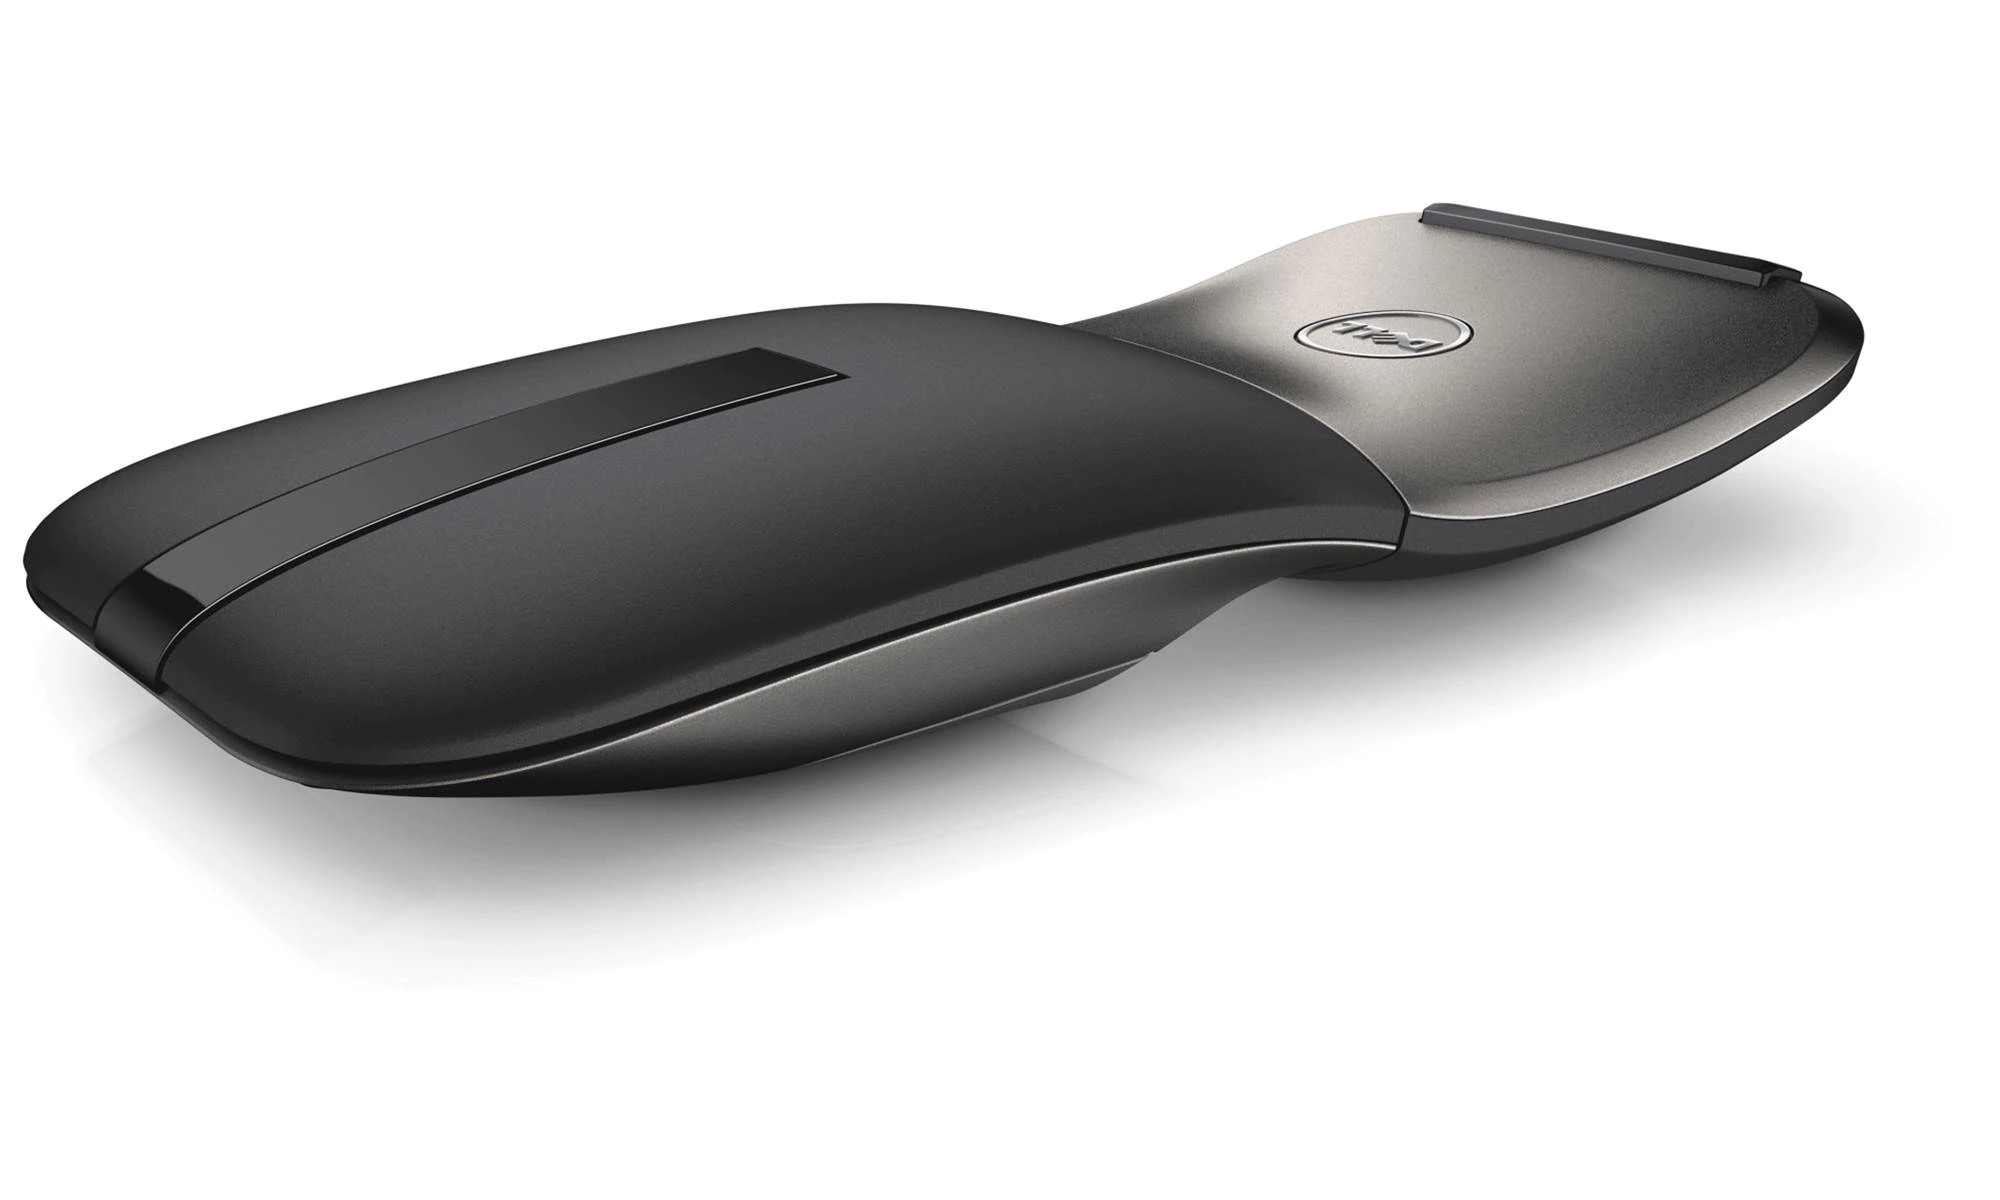 Mouse optic ergonomic original Dell, Bluetooth 4.0, negru, model WM615